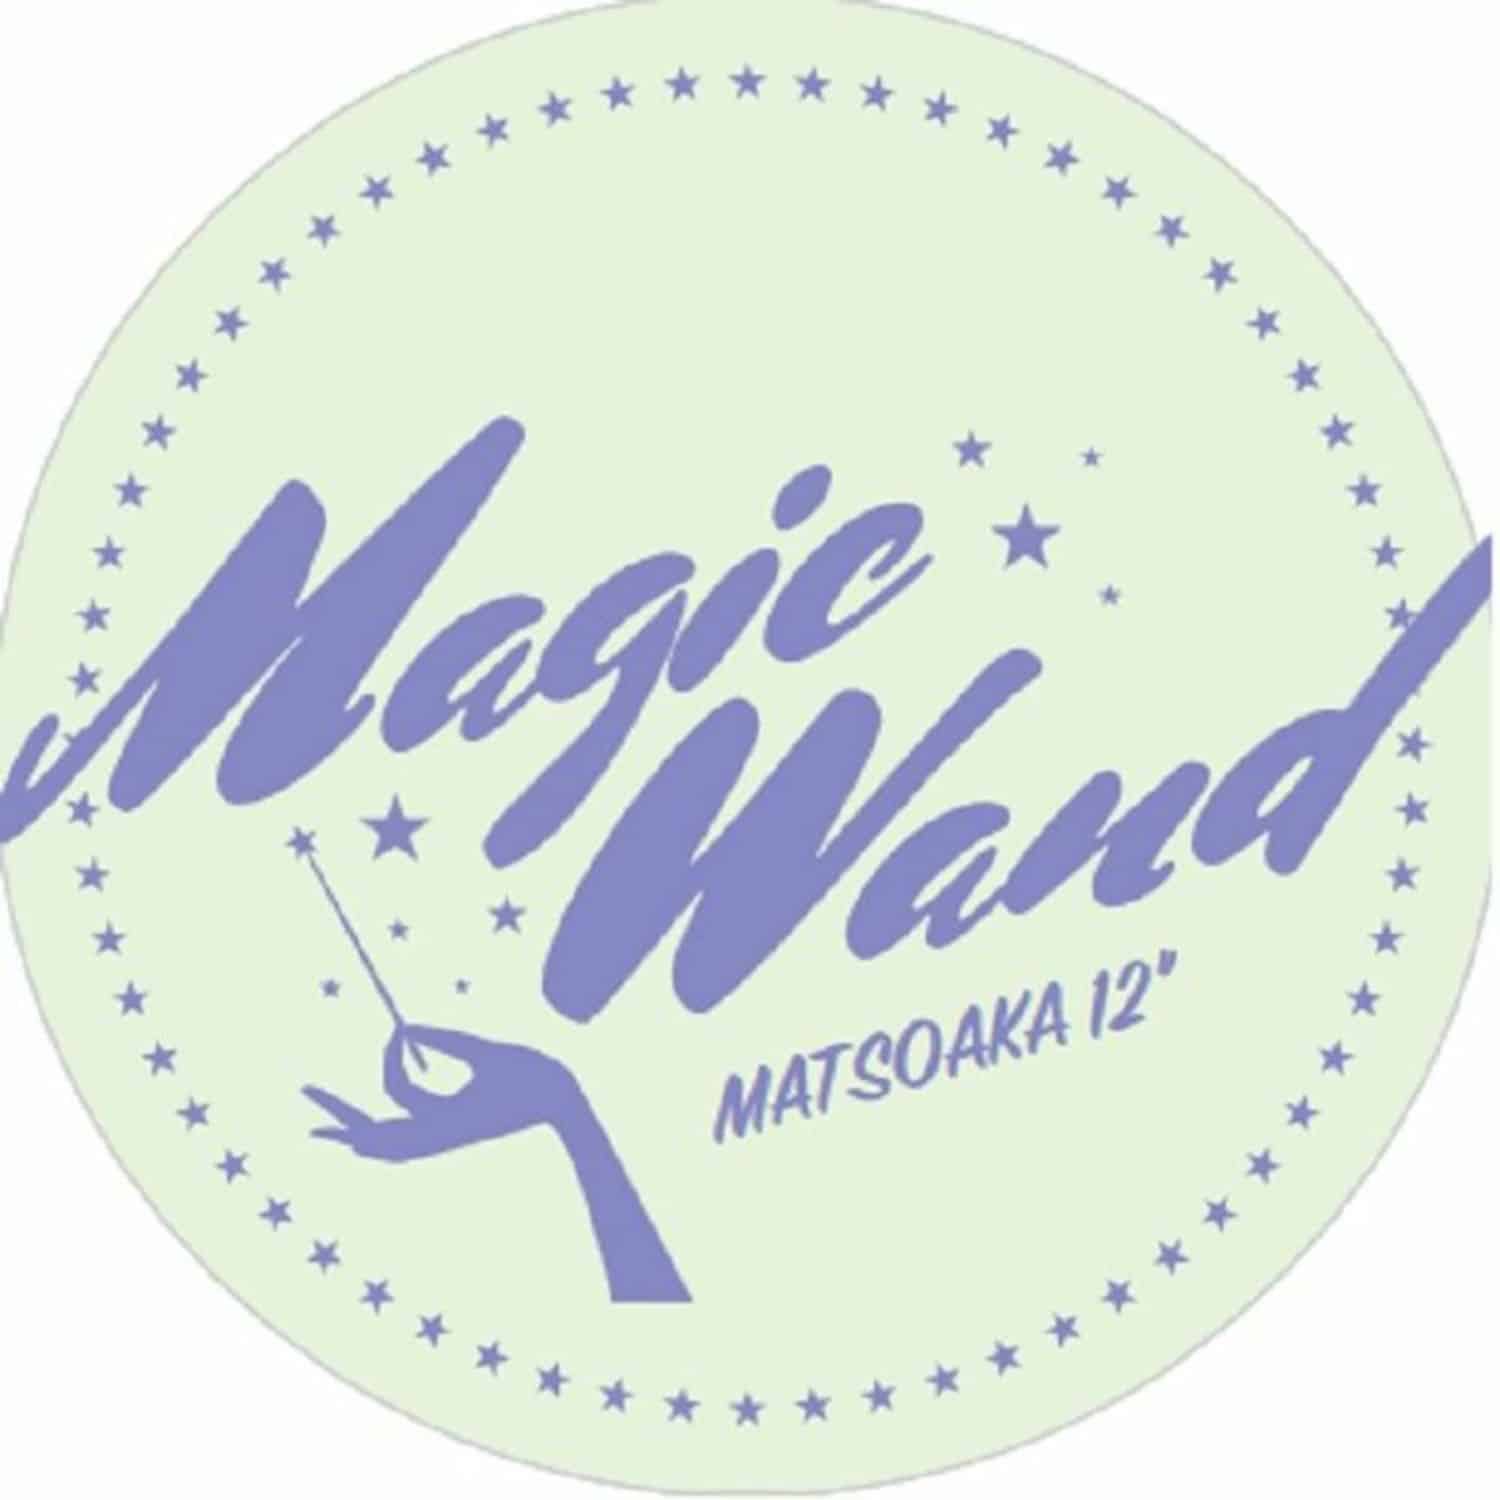 Matsoaka - MATSOAKA 12